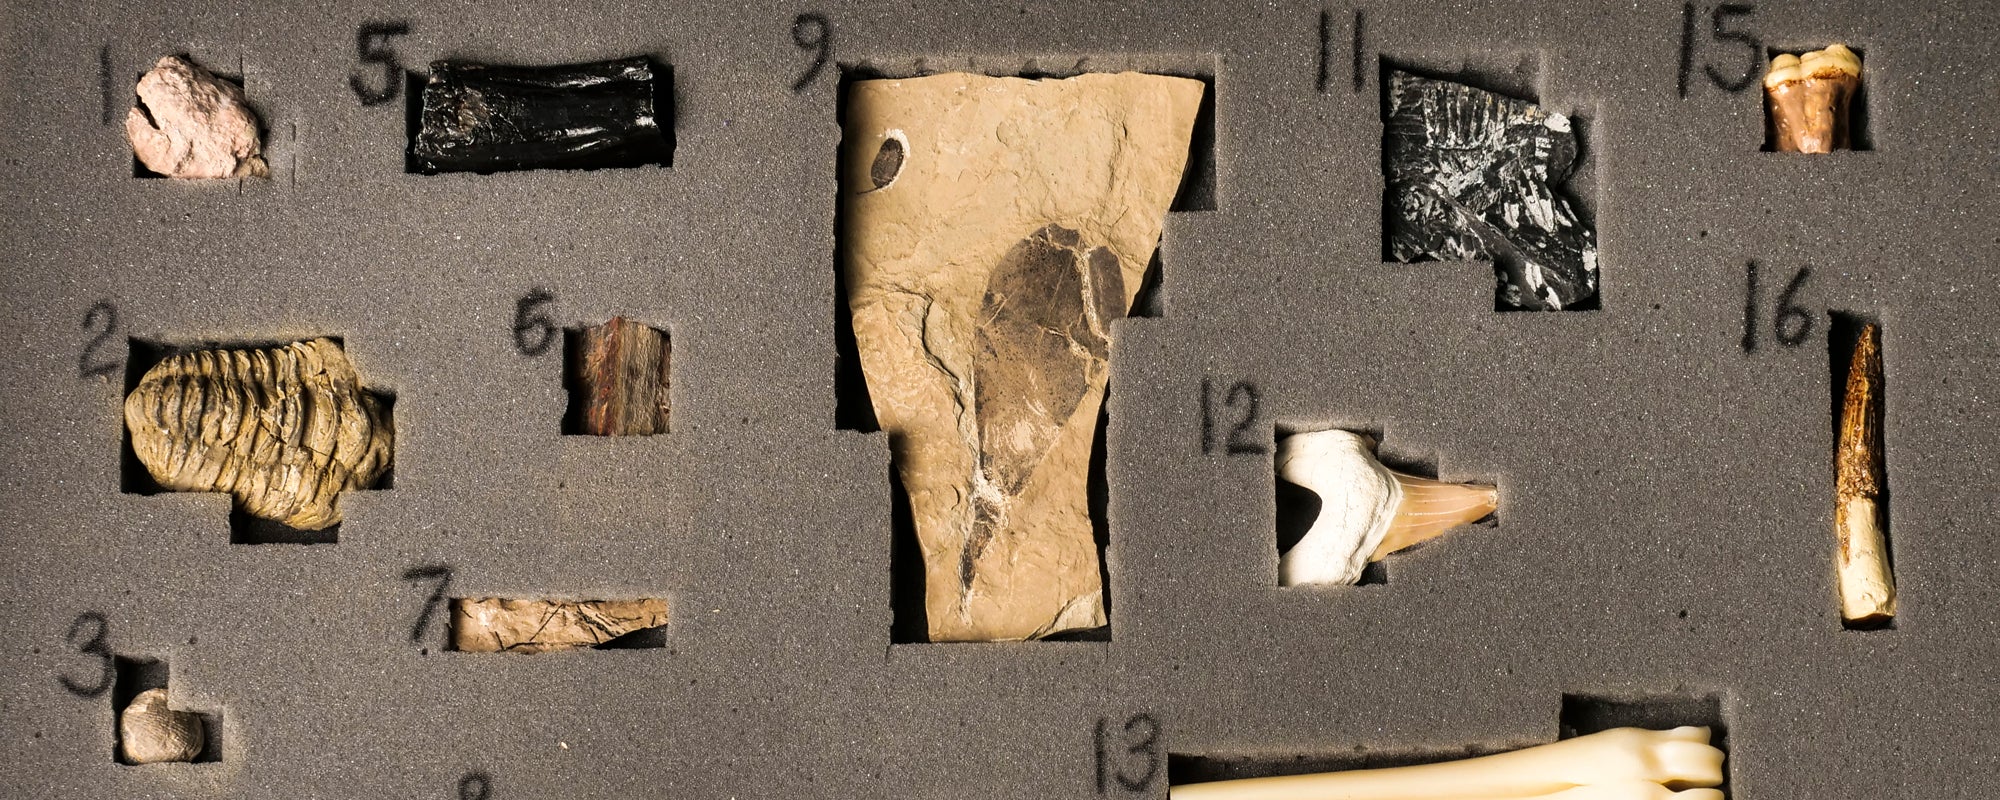 fossil replicas laying in foam insert